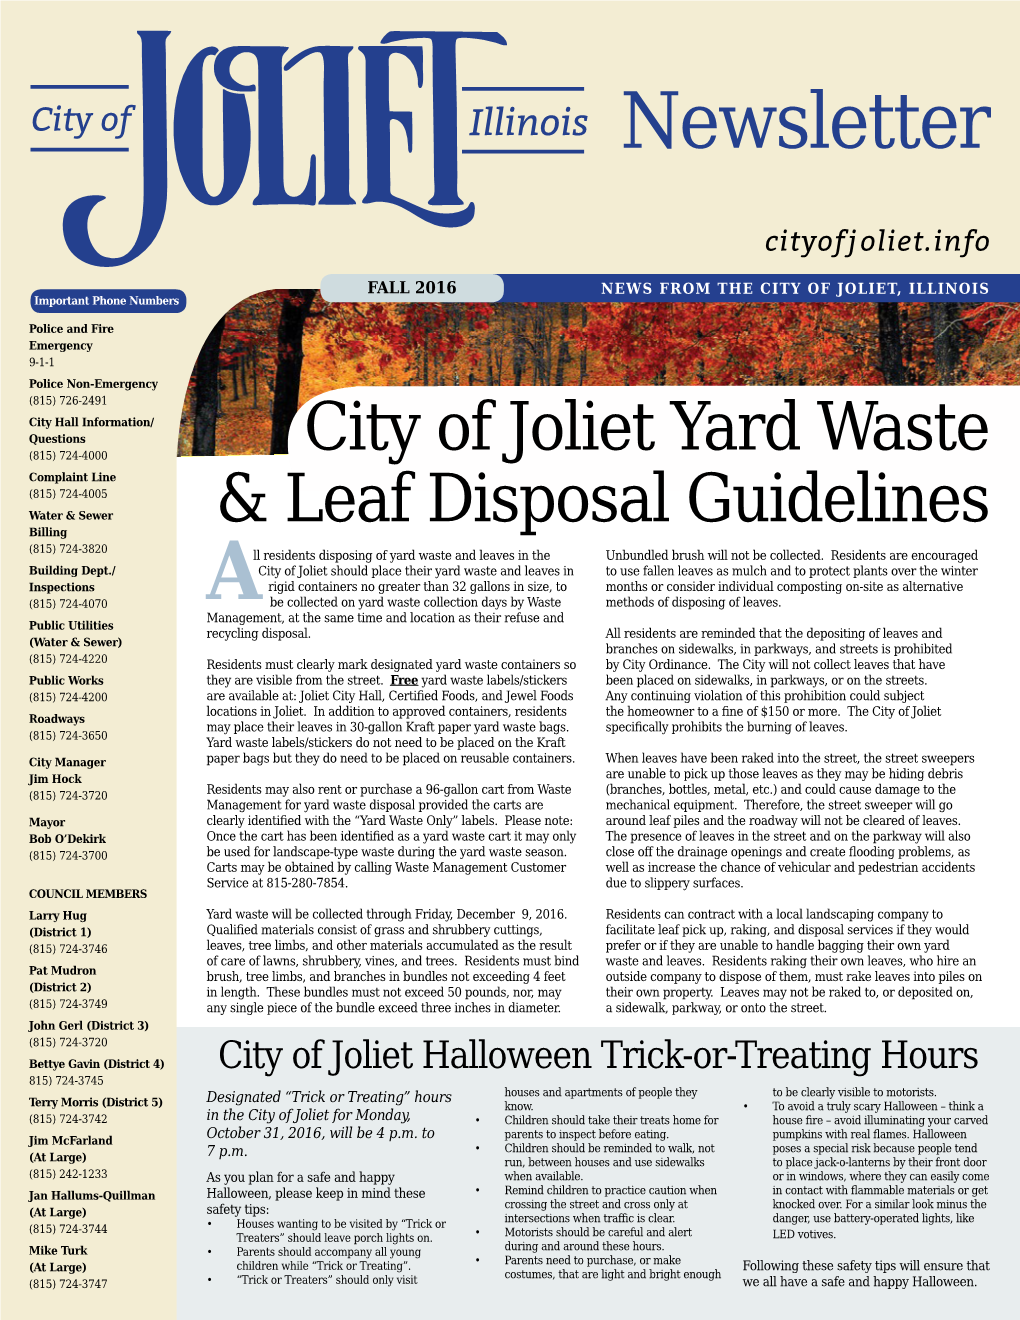 City of Joliet Yard Waste & Leaf Disposal Guidelines